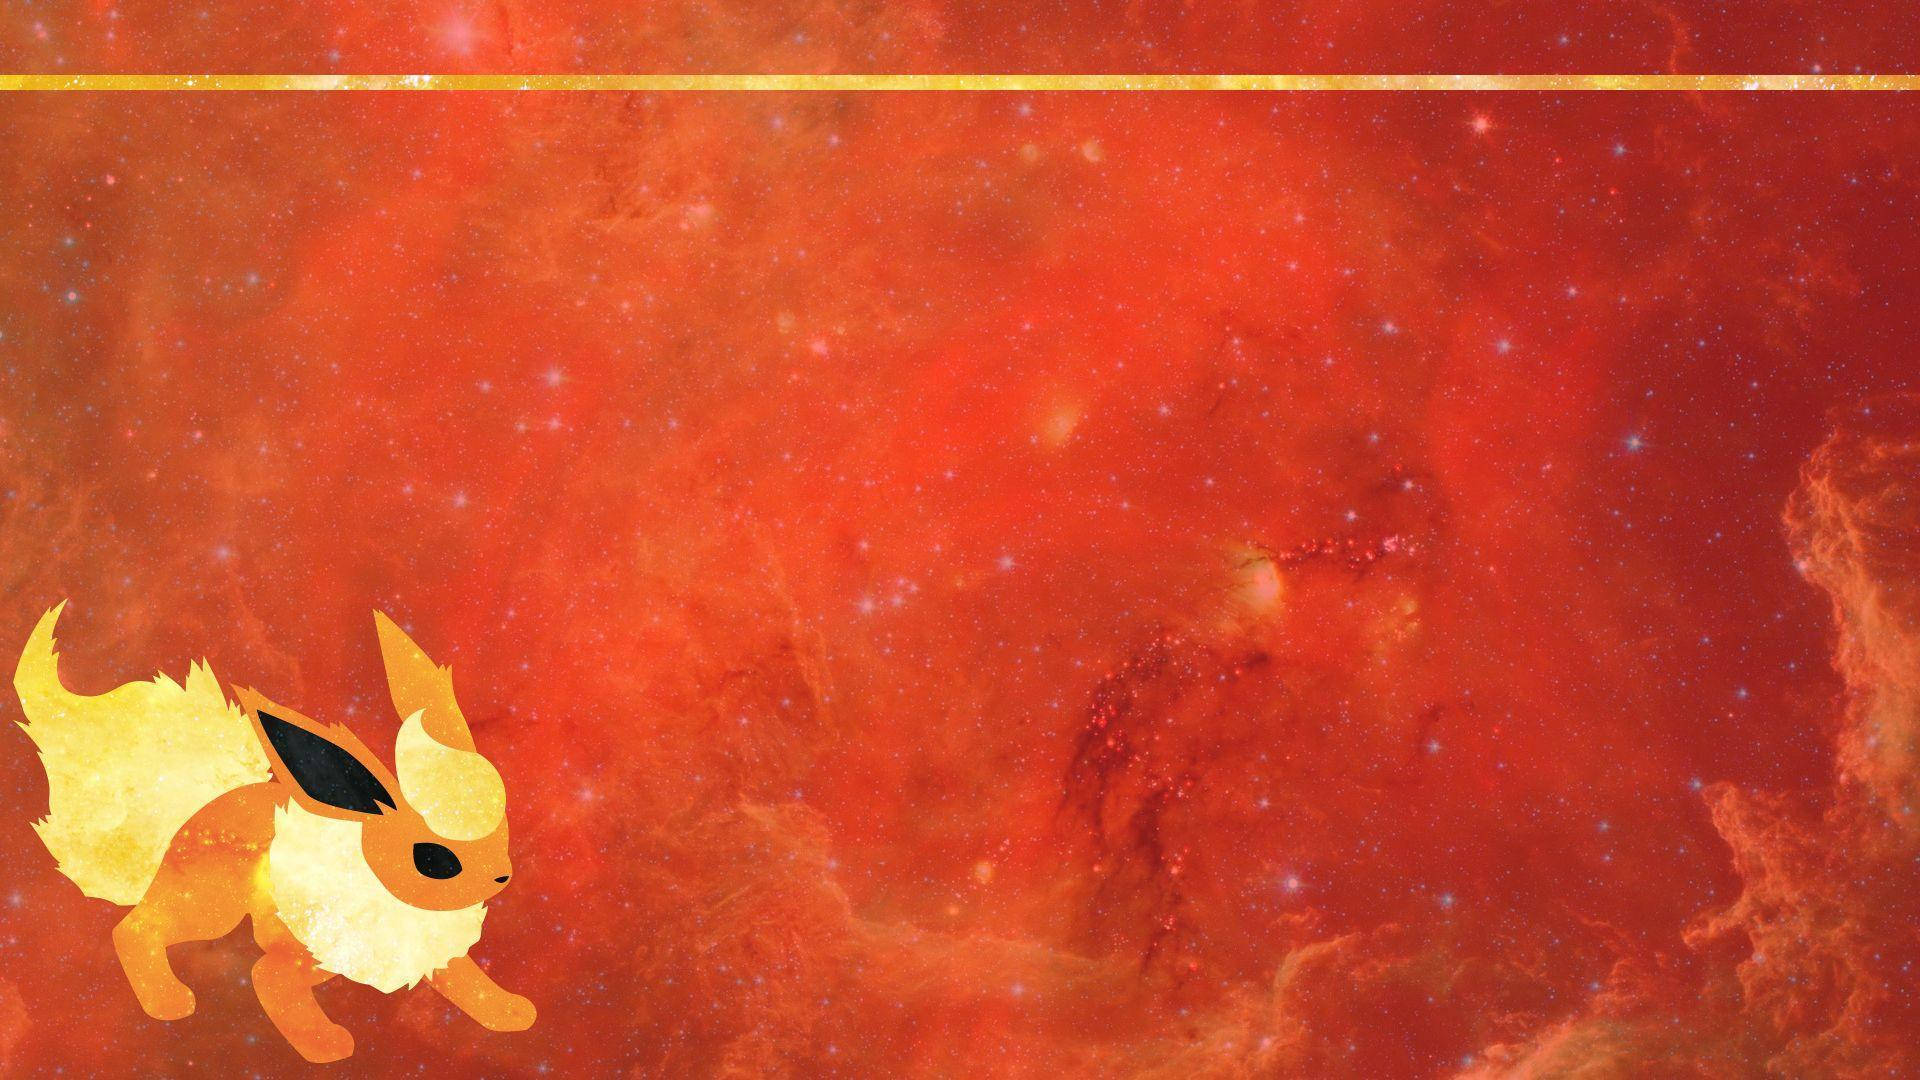 Pokemon Flareon With Textured Orange Background Wallpaper